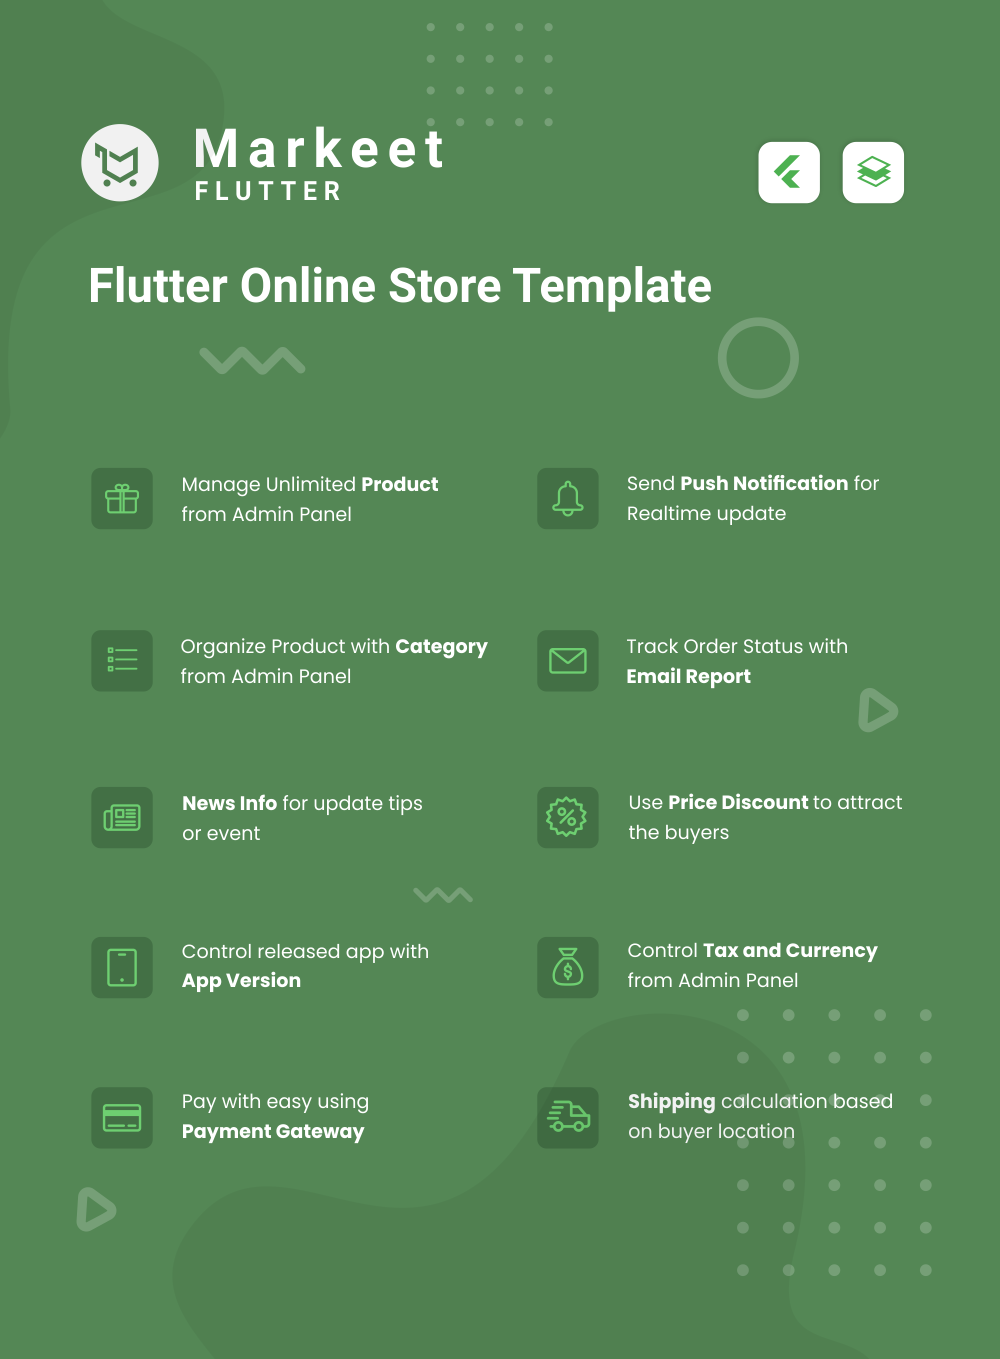 Markeet Flutter - Ecommerce Flutter App 2.0 - 4